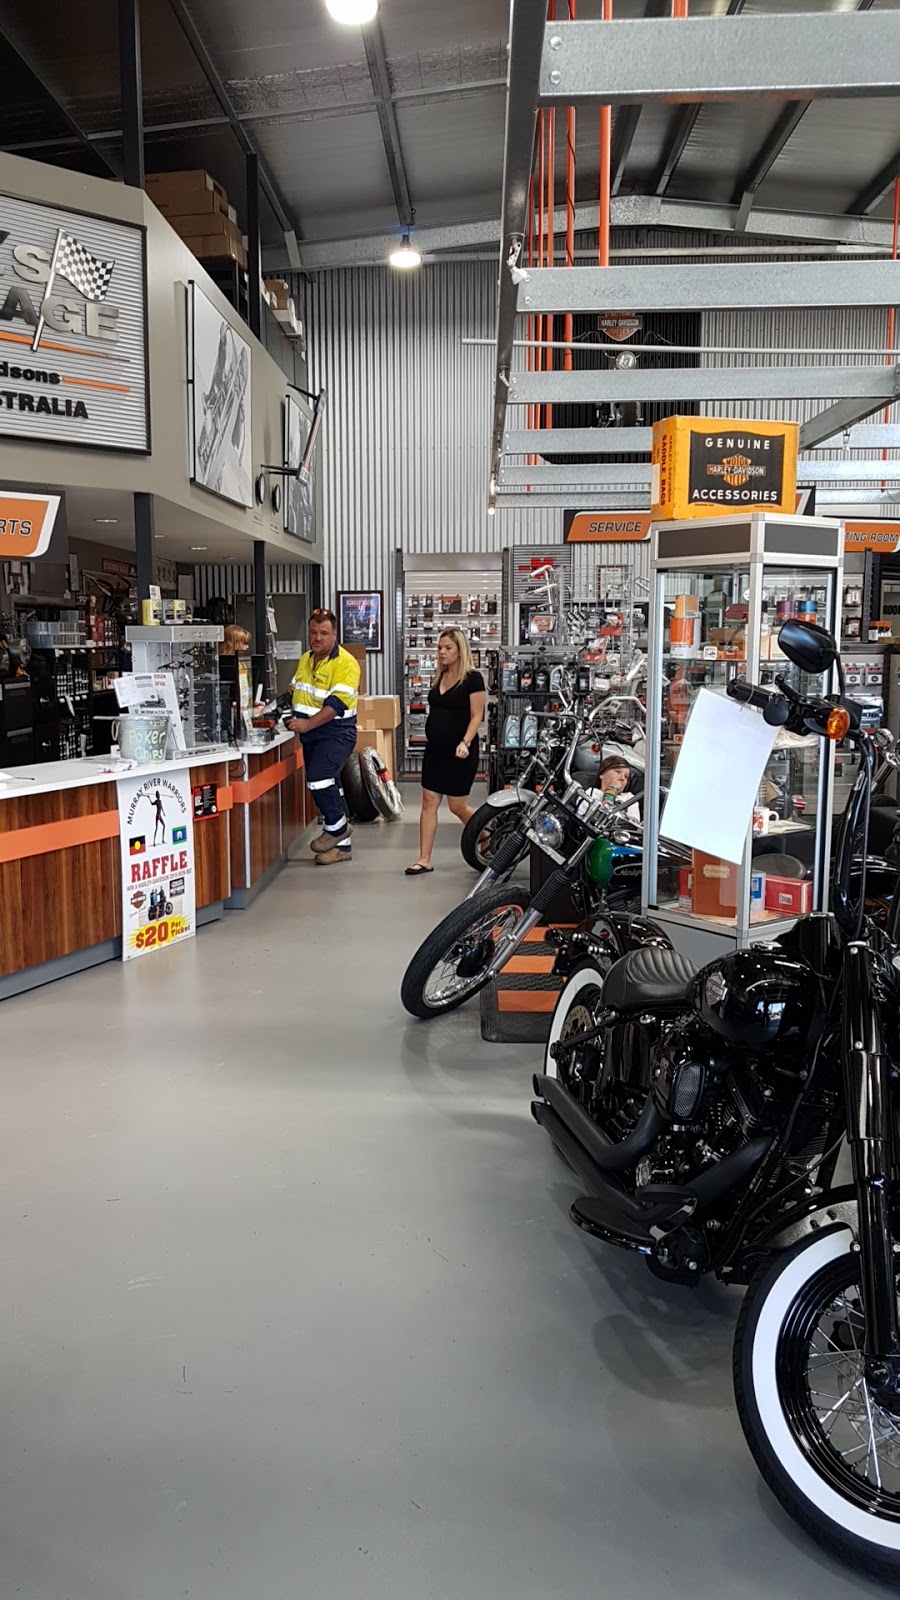 Phils Garage Harley Davidson 401 Wagga Rd Lavington Nsw 2641 Australia